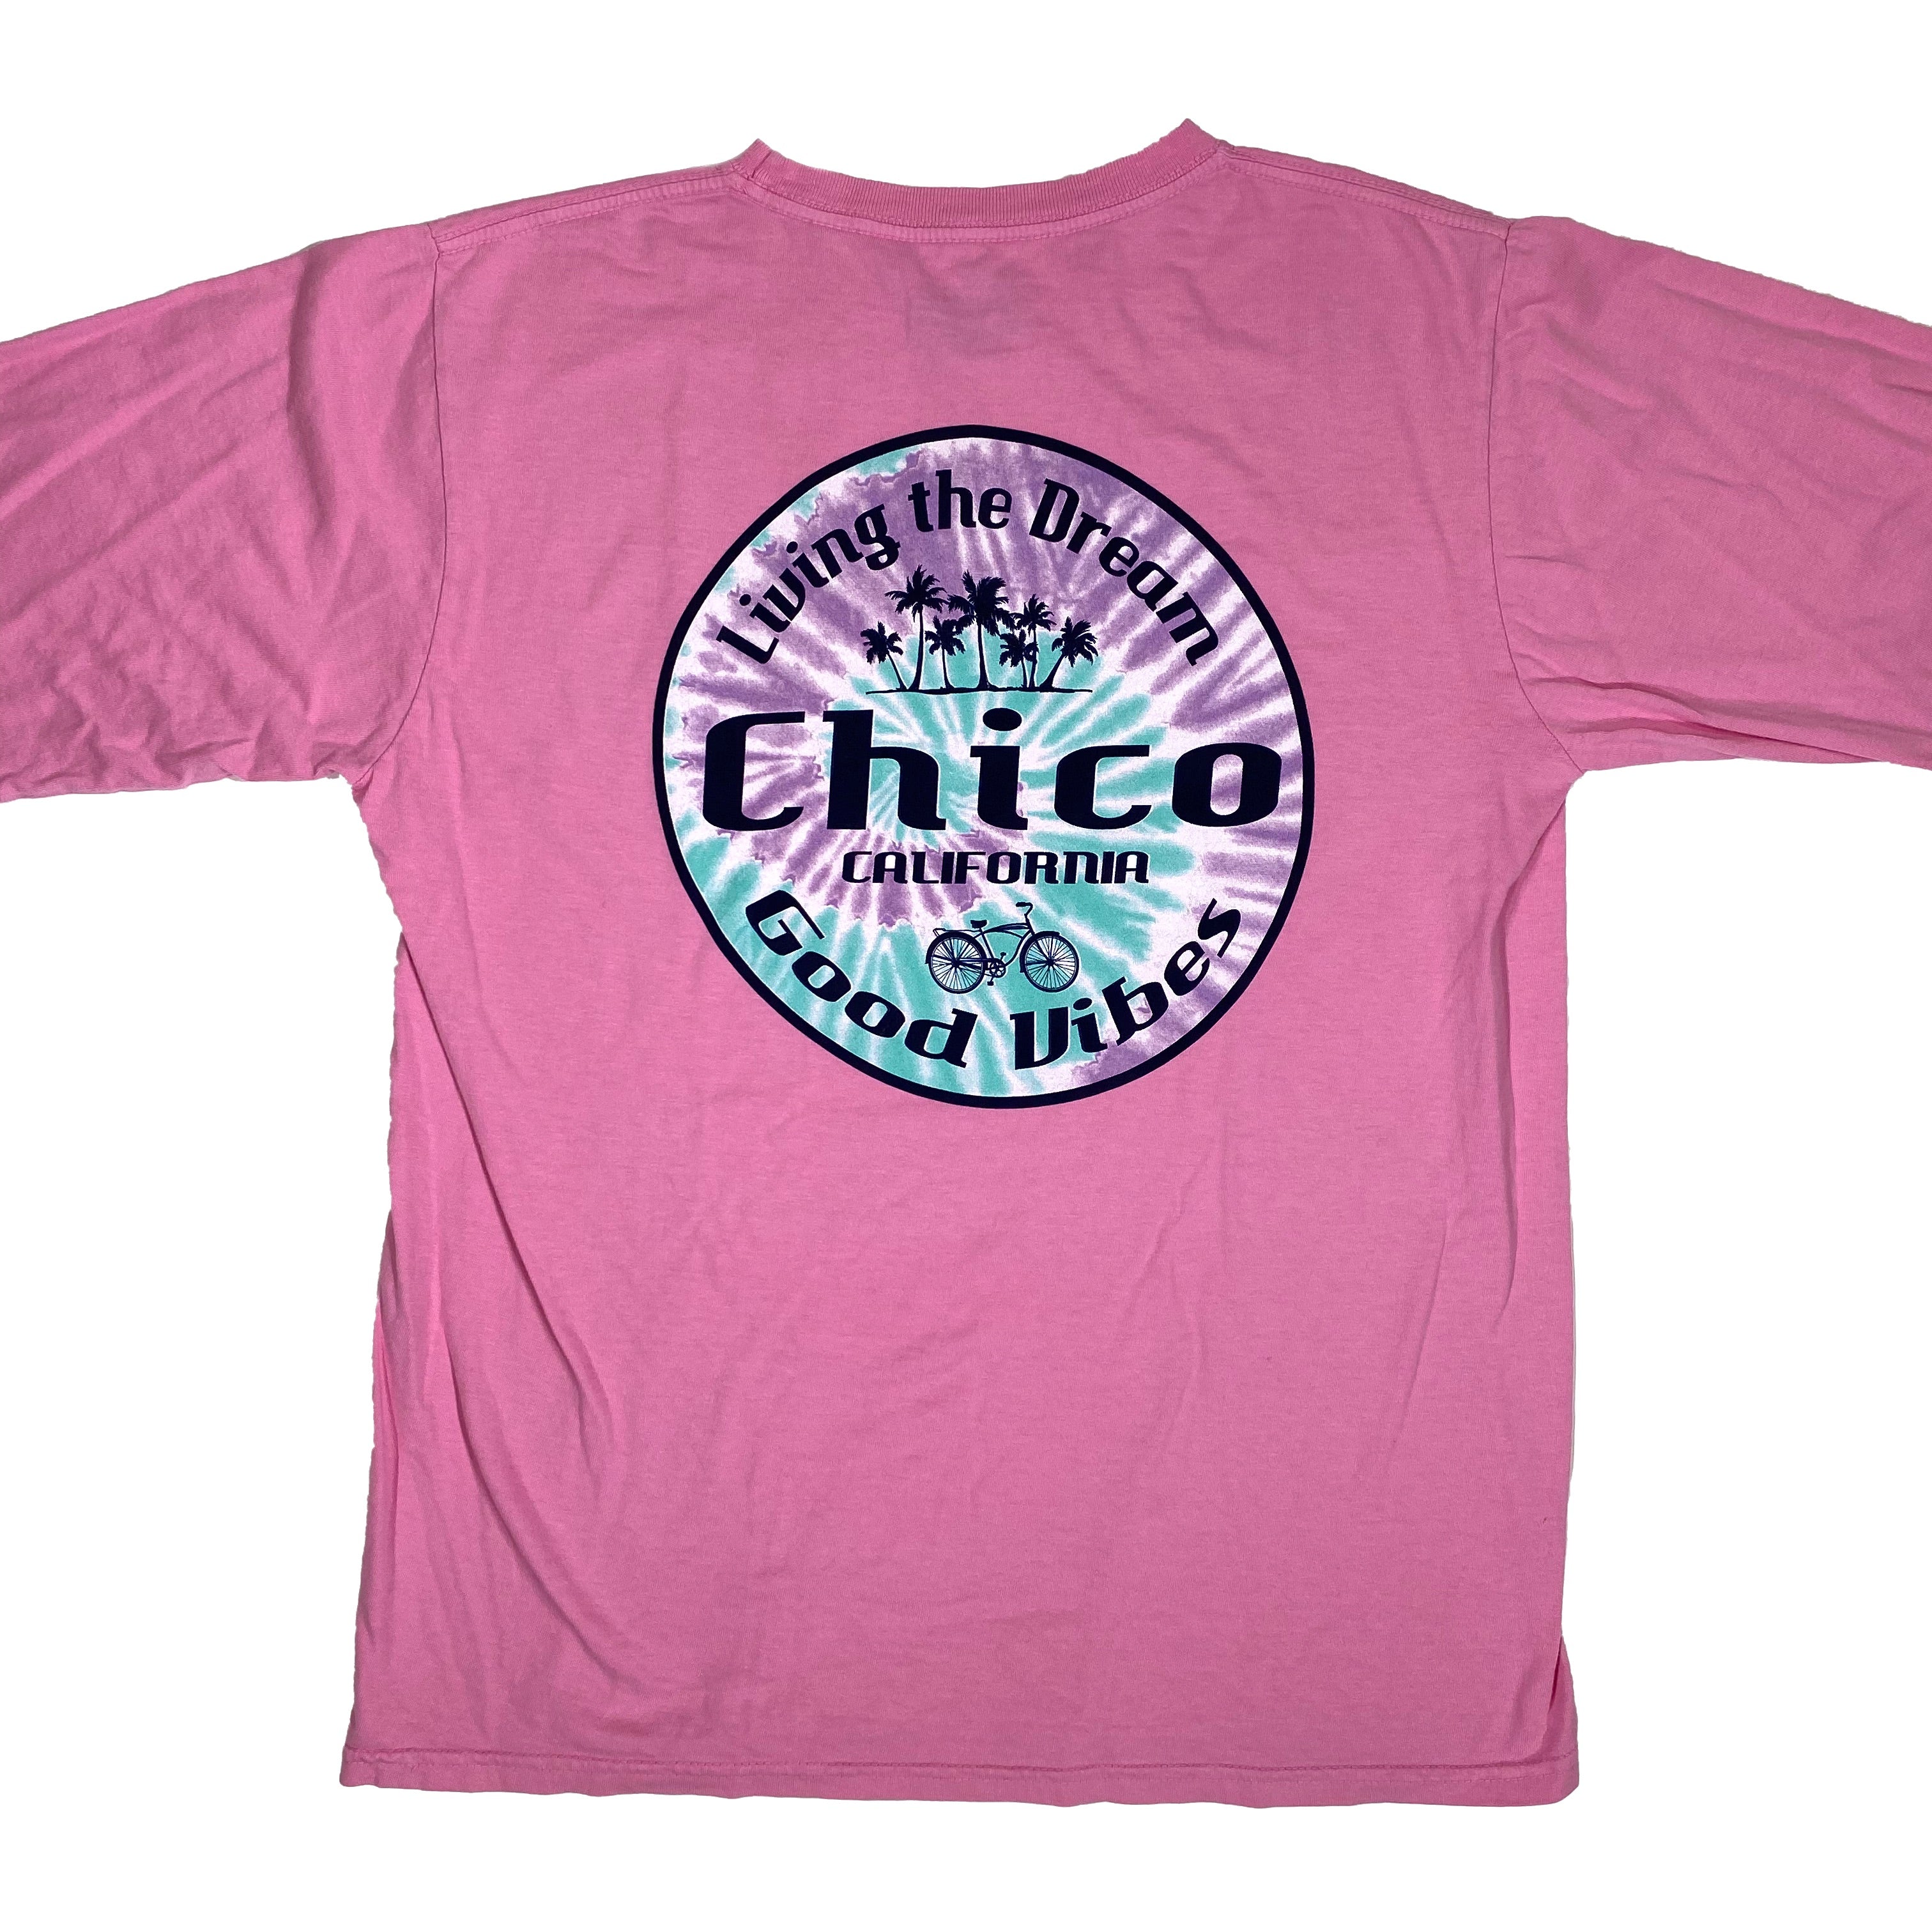 Halogen Mint Swirl - Long Sleeve Chico T-Shirt HOT PINK S  3269969.6